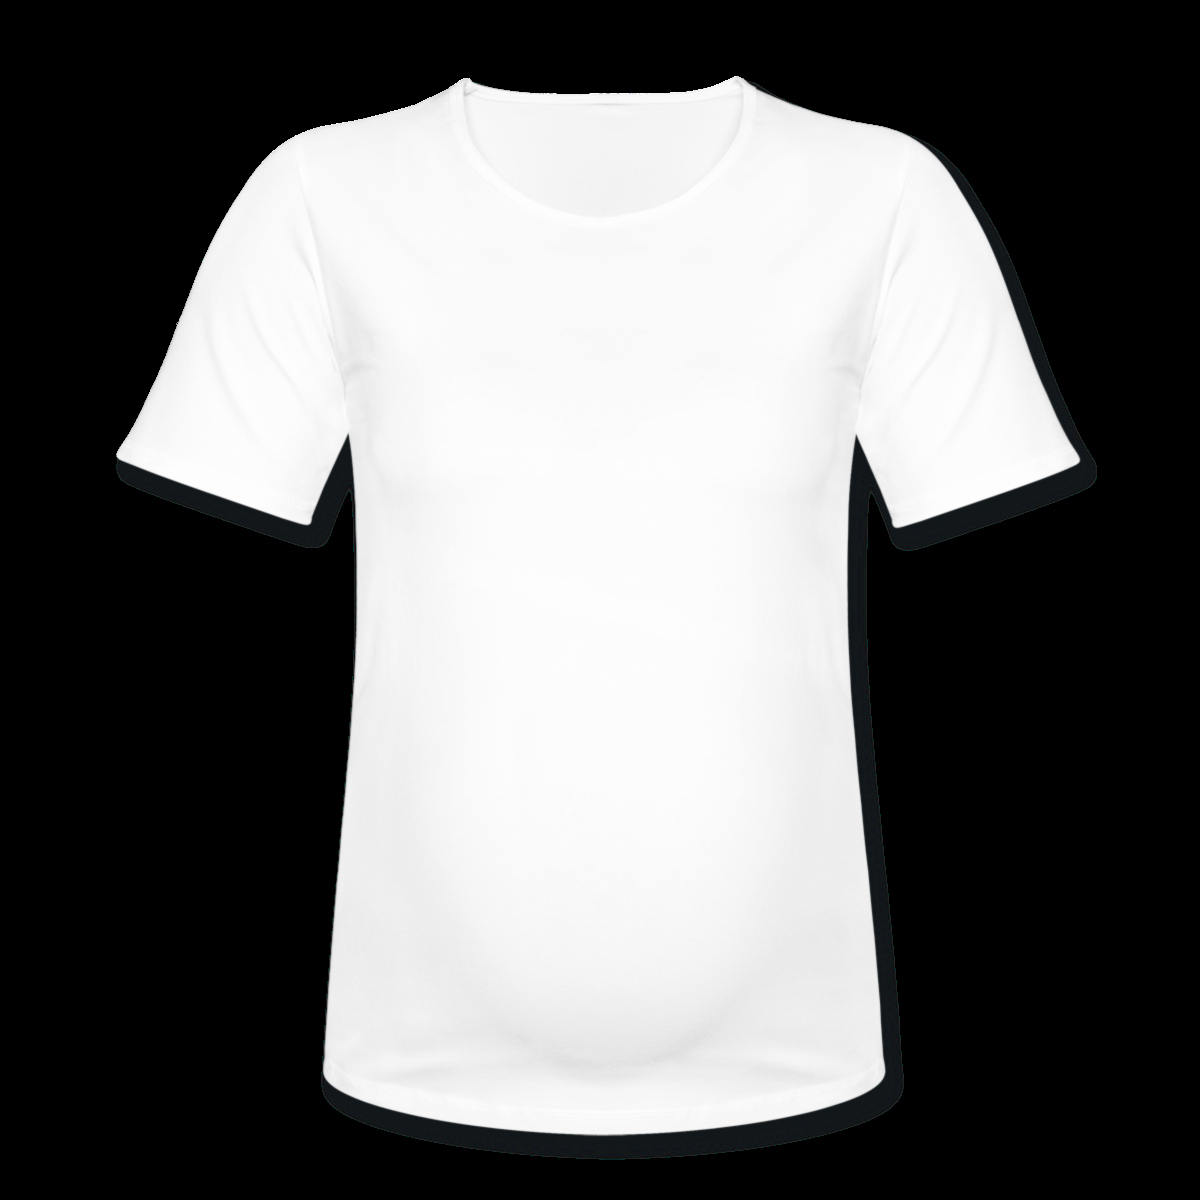 Free Blank T Shirts Download Free Clip Art Free Clip Art